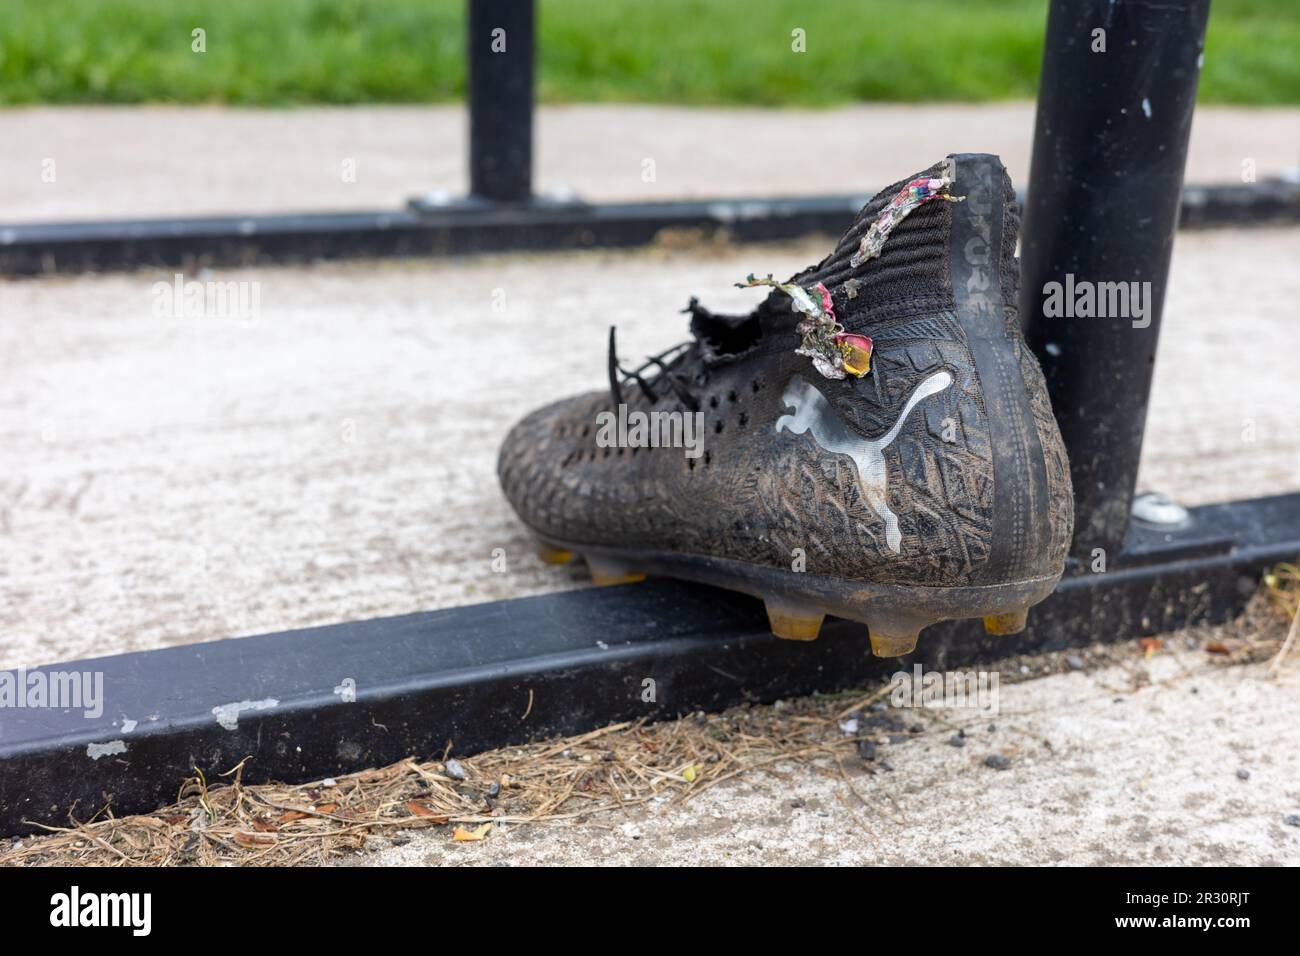 Single Puma football boot left at the training ground Stock Photo